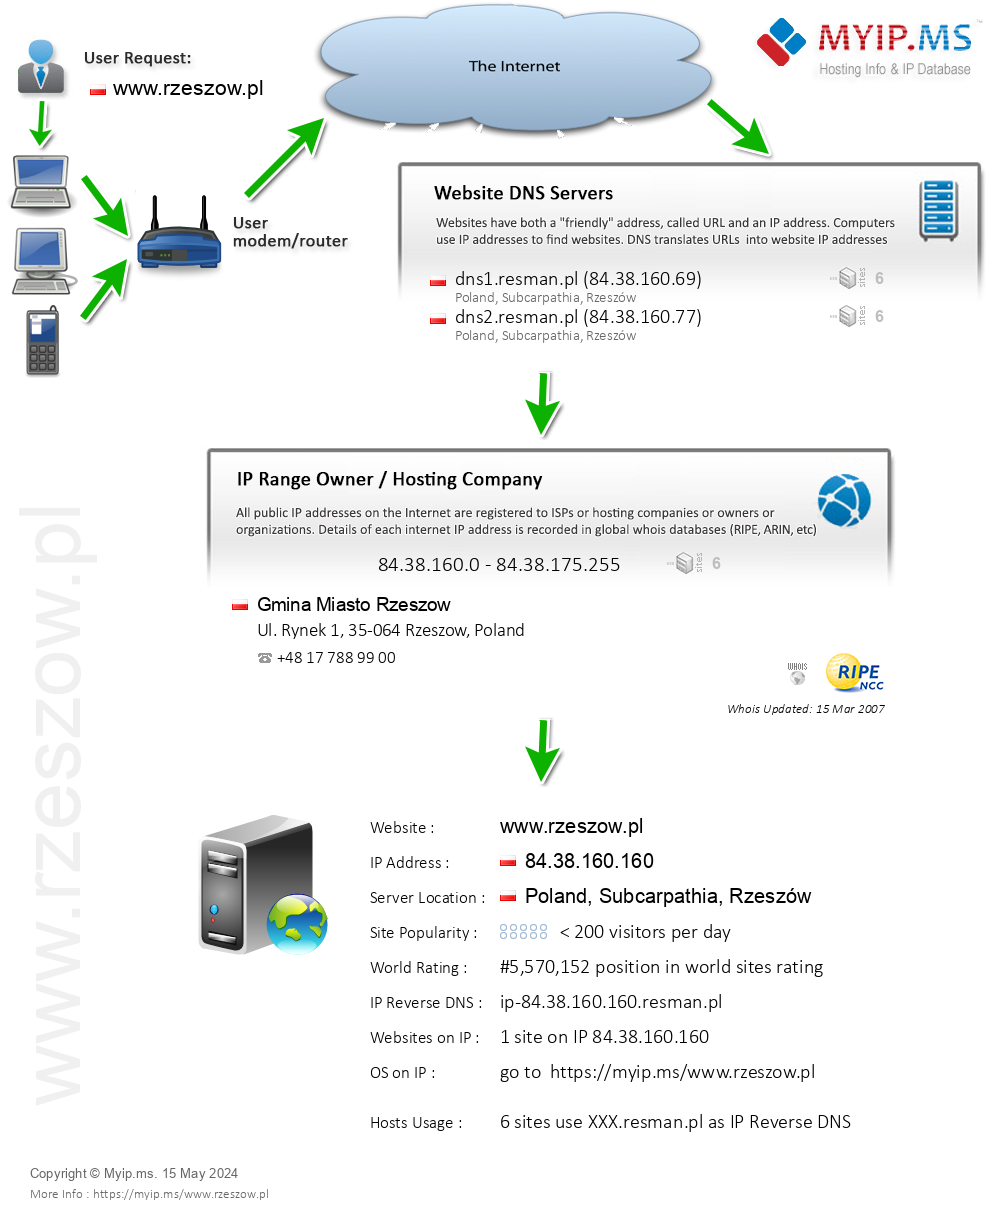 Rzeszow.pl - Website Hosting Visual IP Diagram